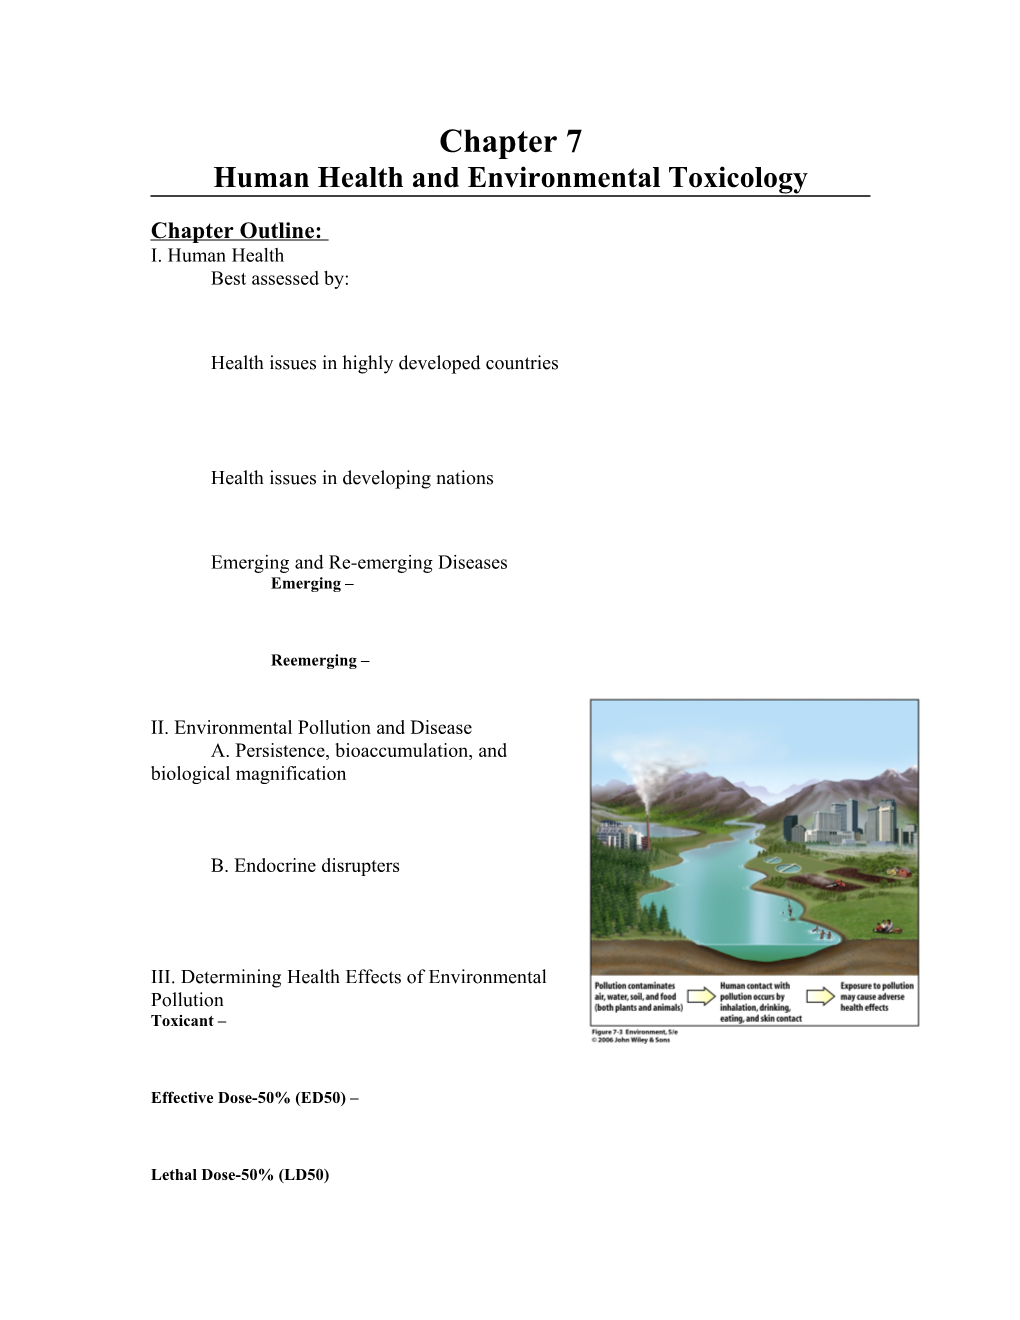 Human Health and Environmental Toxicology s1